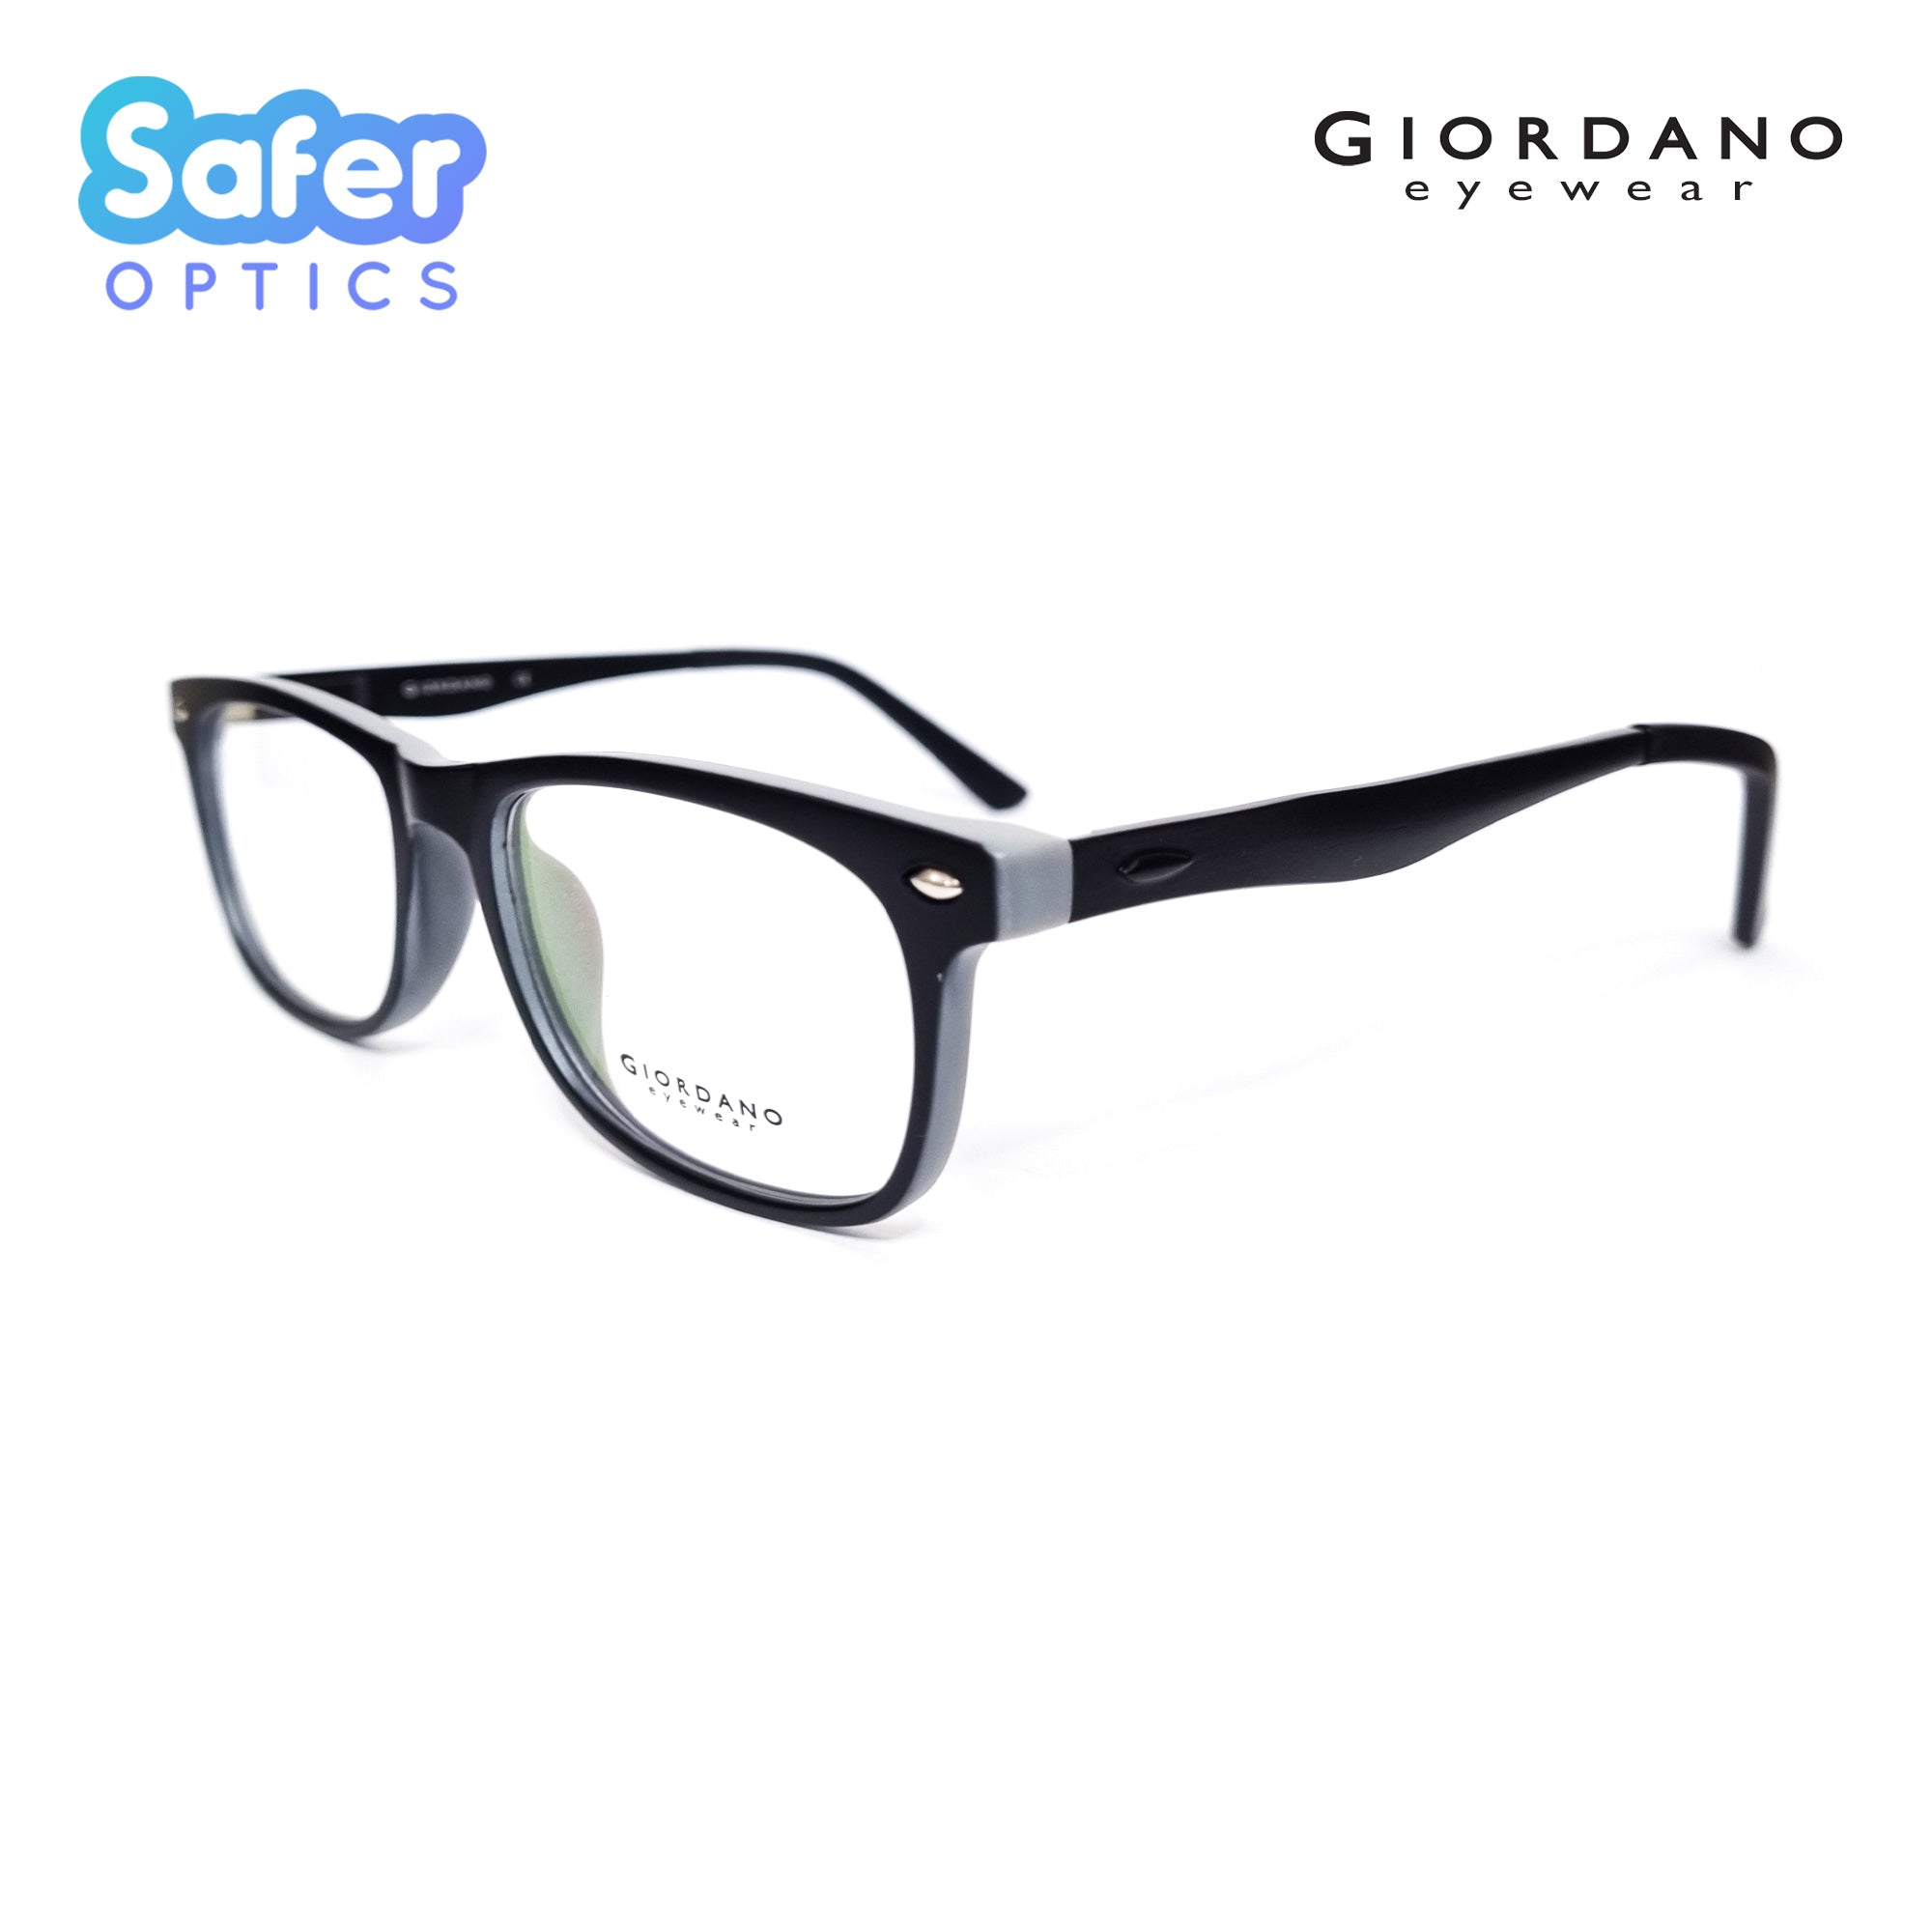 Buy Giordano Unisex Wayfarer Polarized UV Protected Sunglasses online